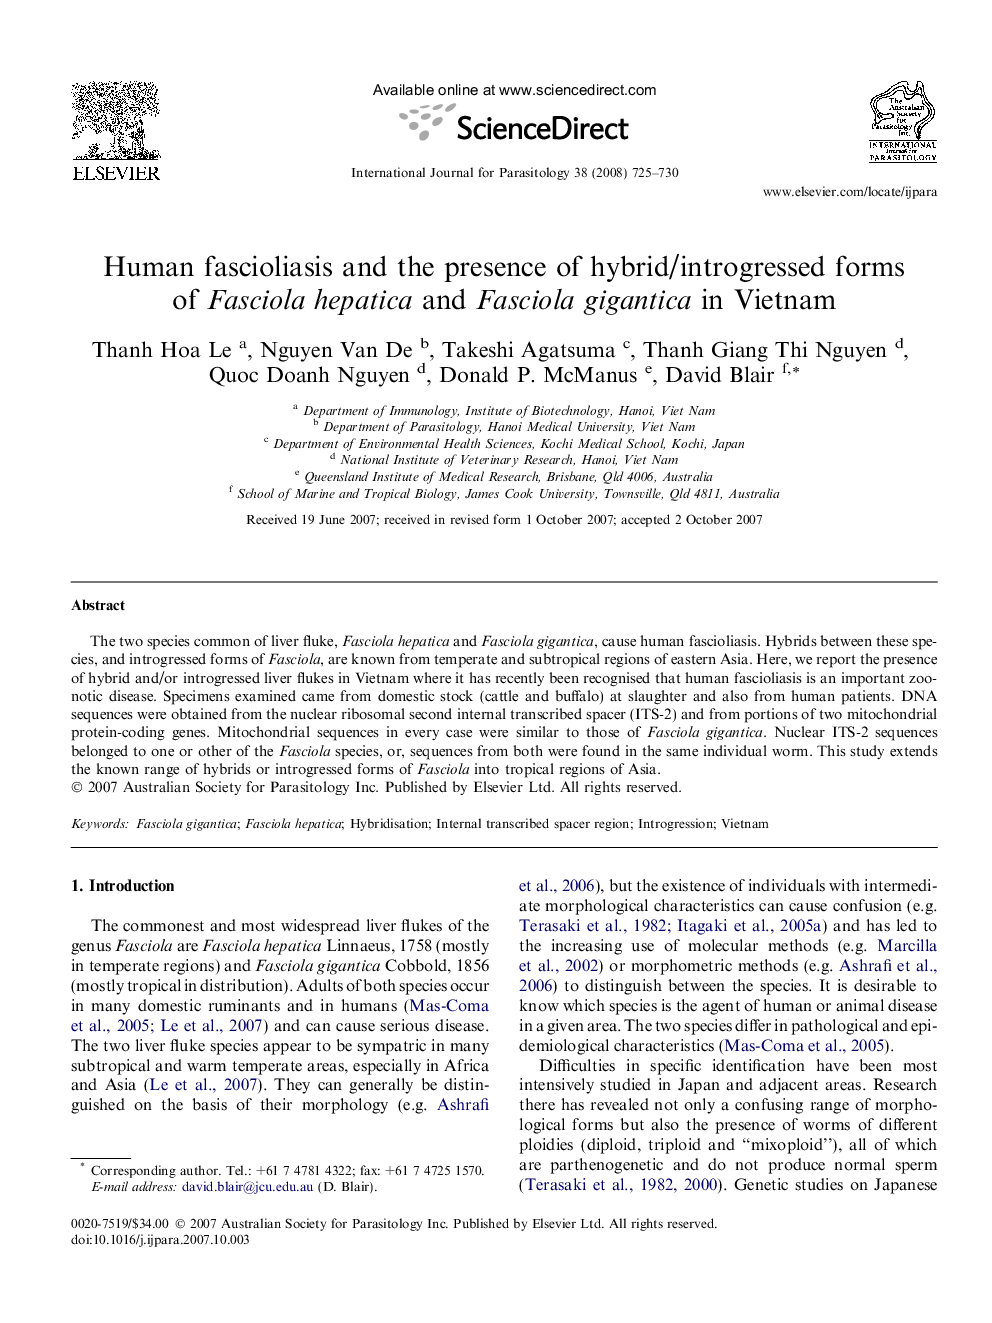 Human fascioliasis and the presence of hybrid/introgressed forms of Fasciola hepatica and Fasciola gigantica in Vietnam